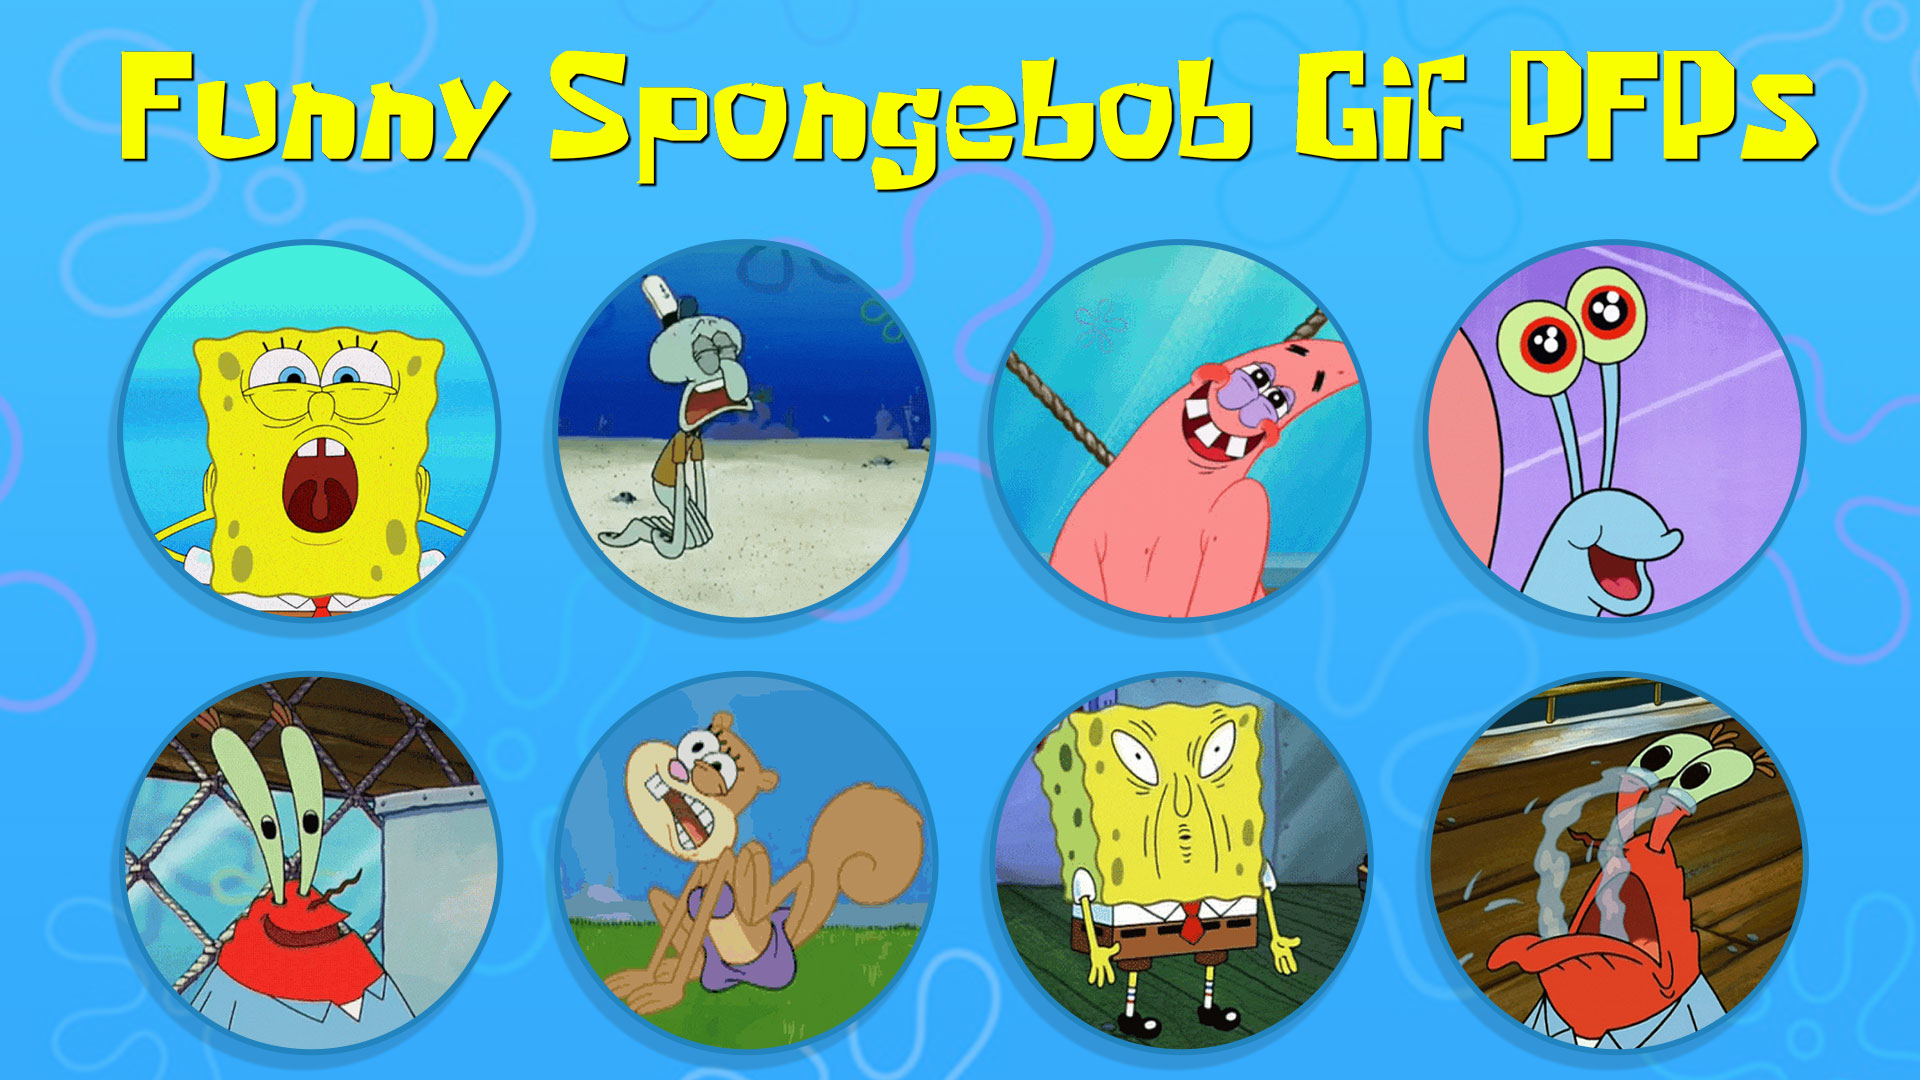 funny spongebob gif pfps